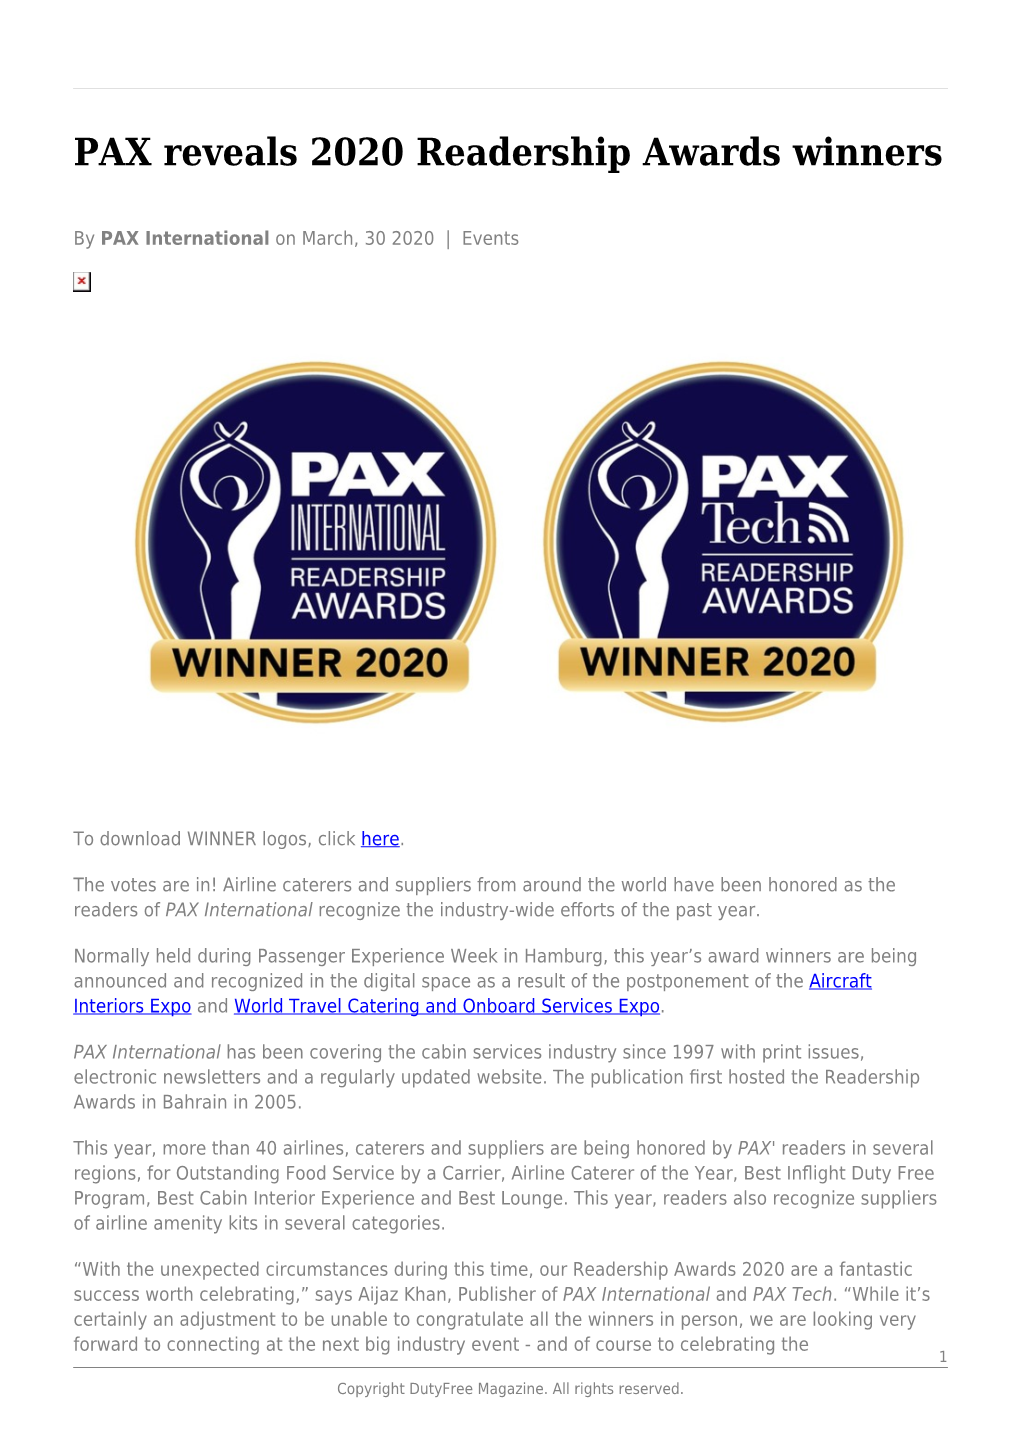 PAX Reveals 2020 Readership Awards Winners